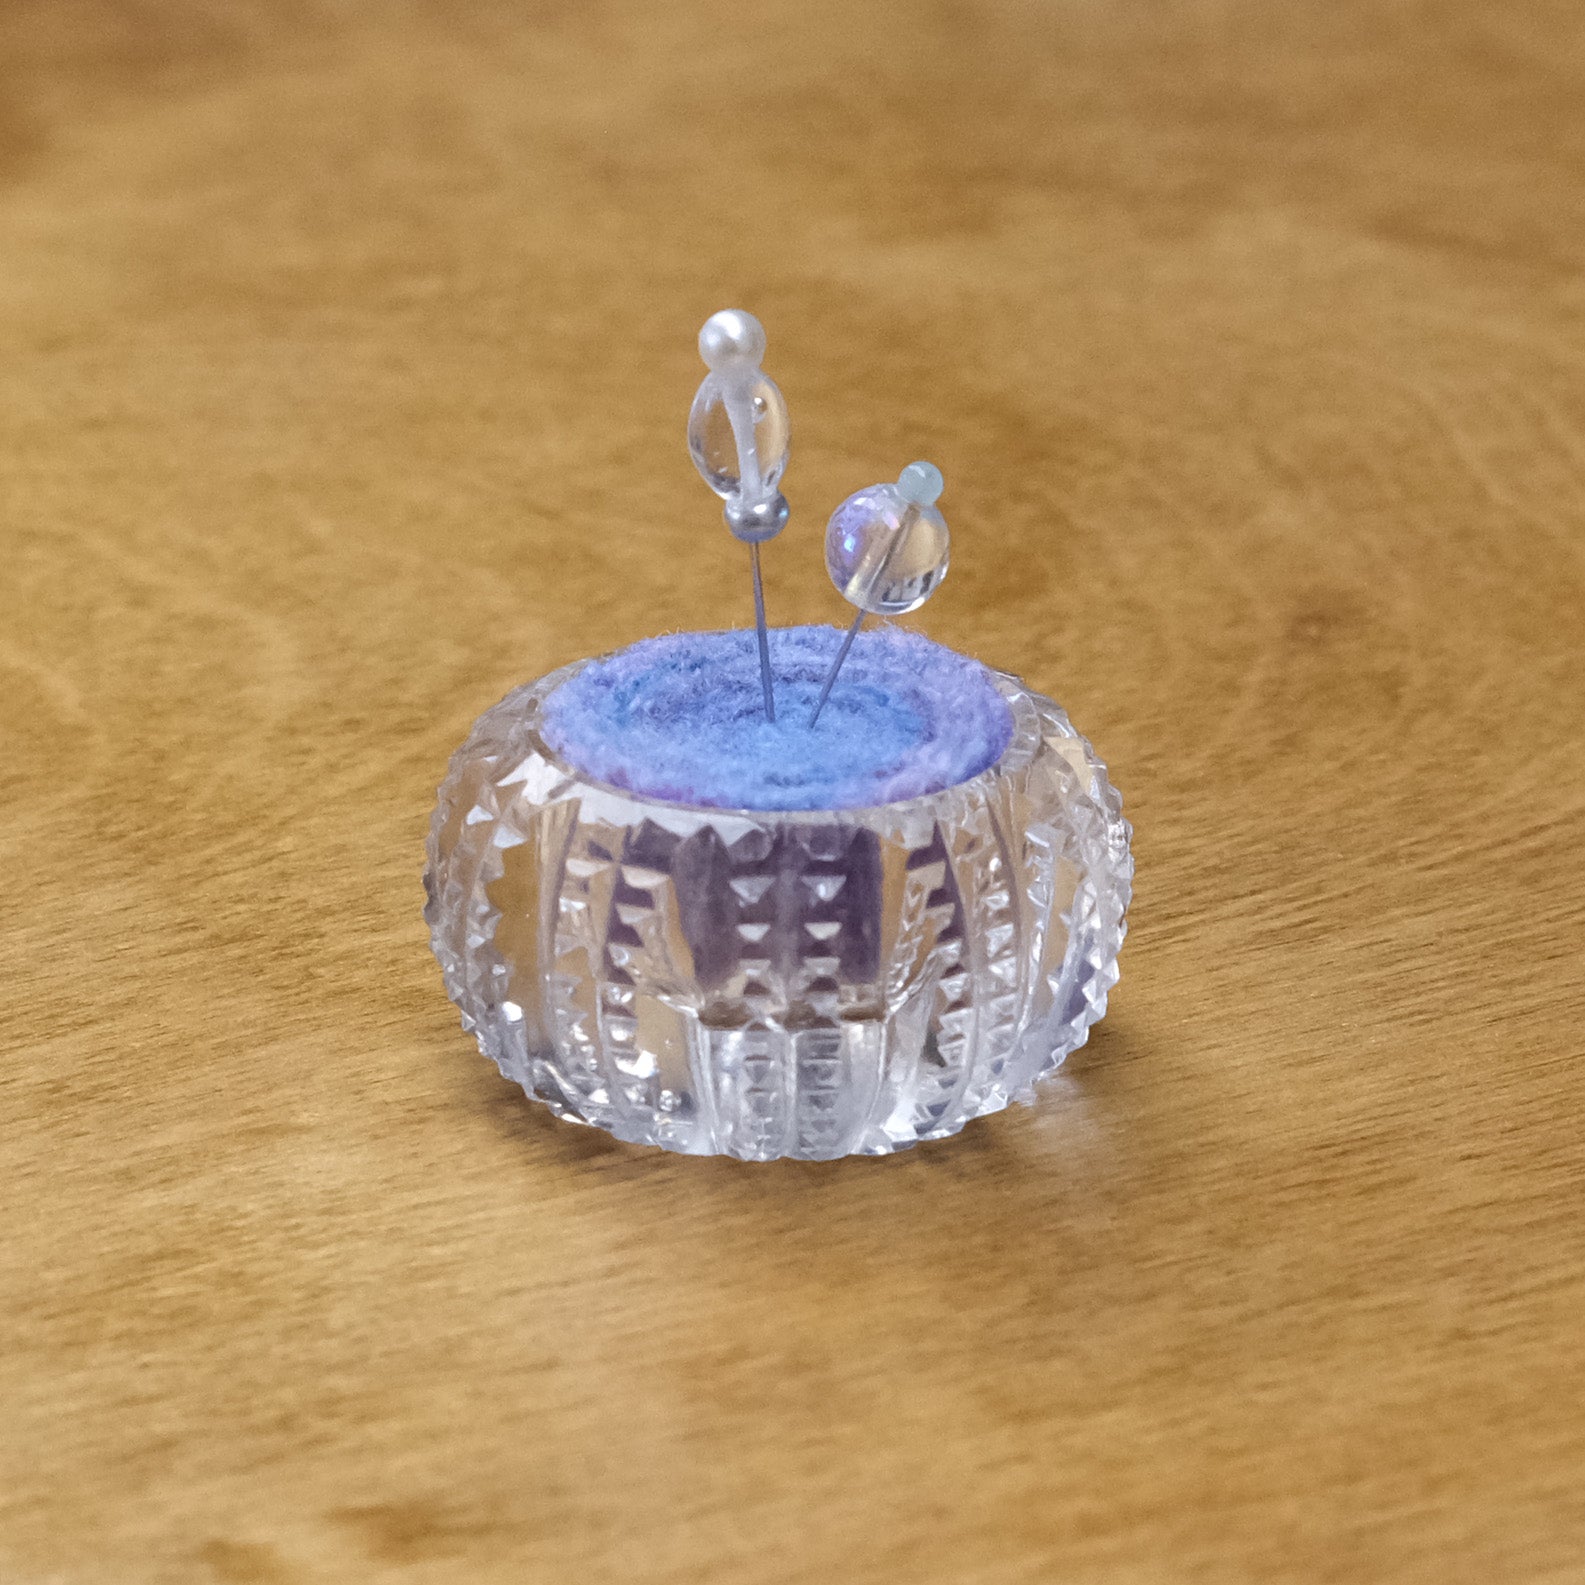 Vintage Pincushion - Crystal with Lavender Wool